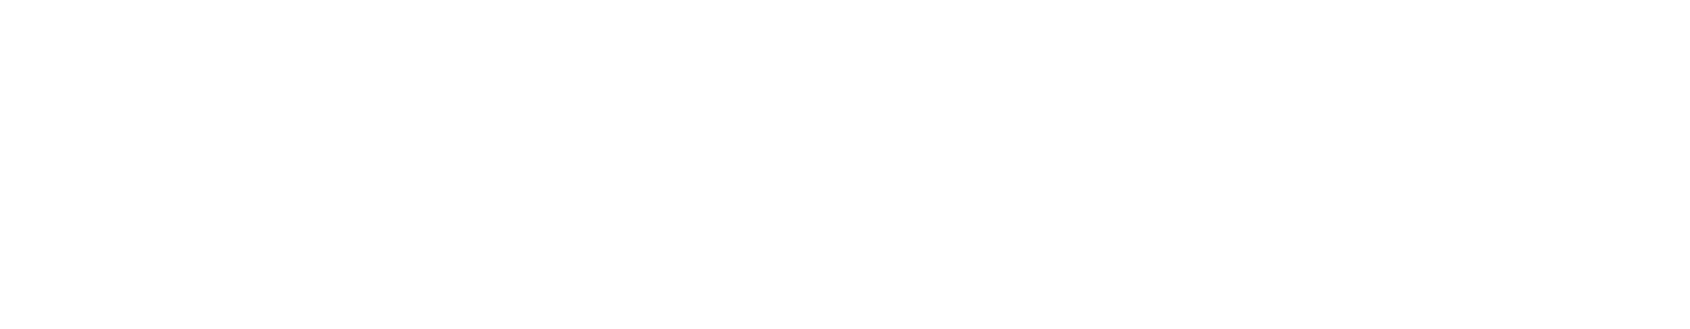 ConnecToledo logo - link goes to ConnecToledo site